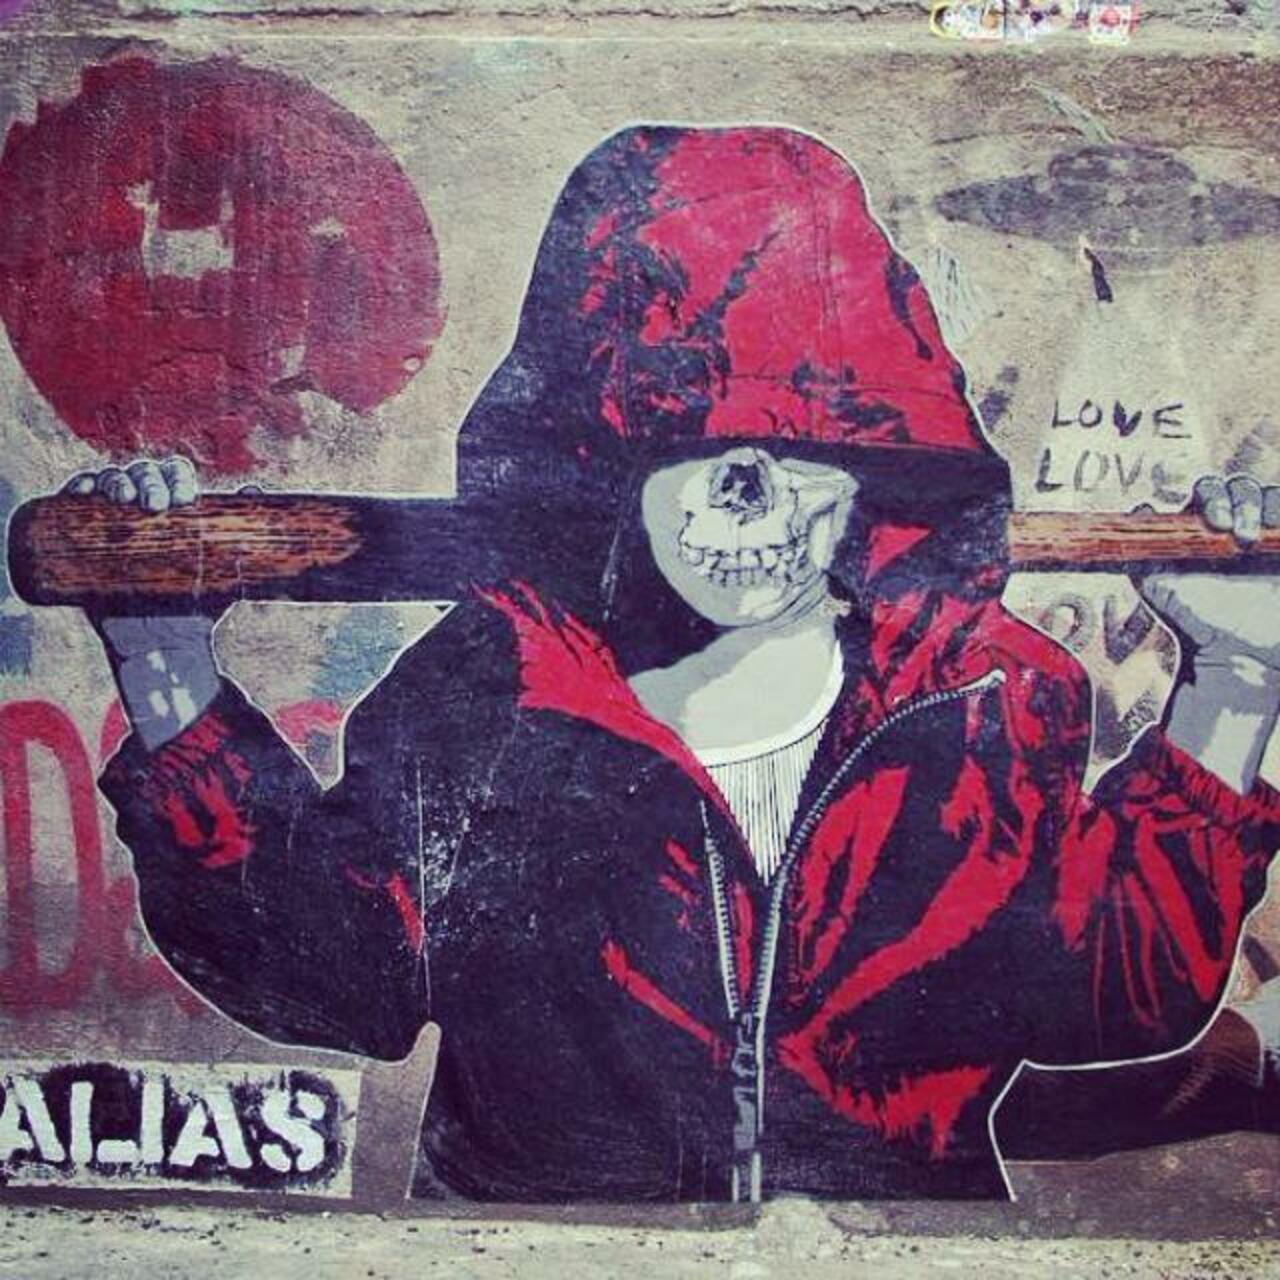 #stencilart #sticker #streetart #Graffiti #urbanart #mural #murales http://t.co/EazdSj4FO8